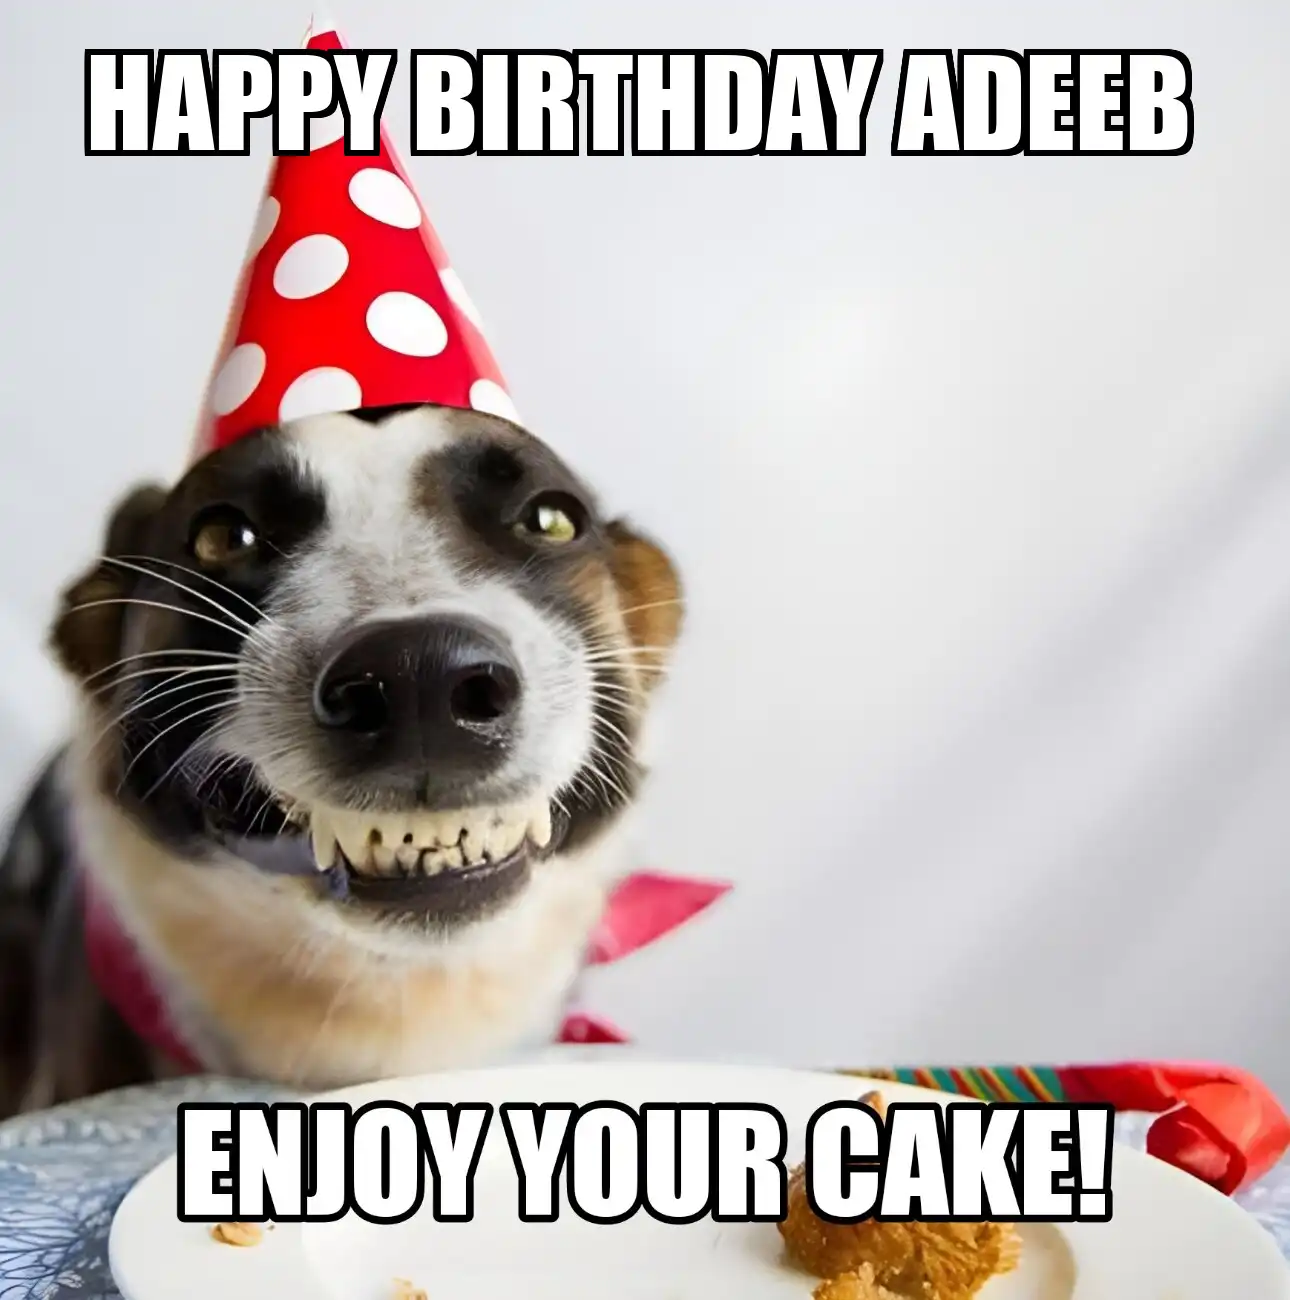 Happy Birthday Adeeb Enjoy Your Cake Dog Meme